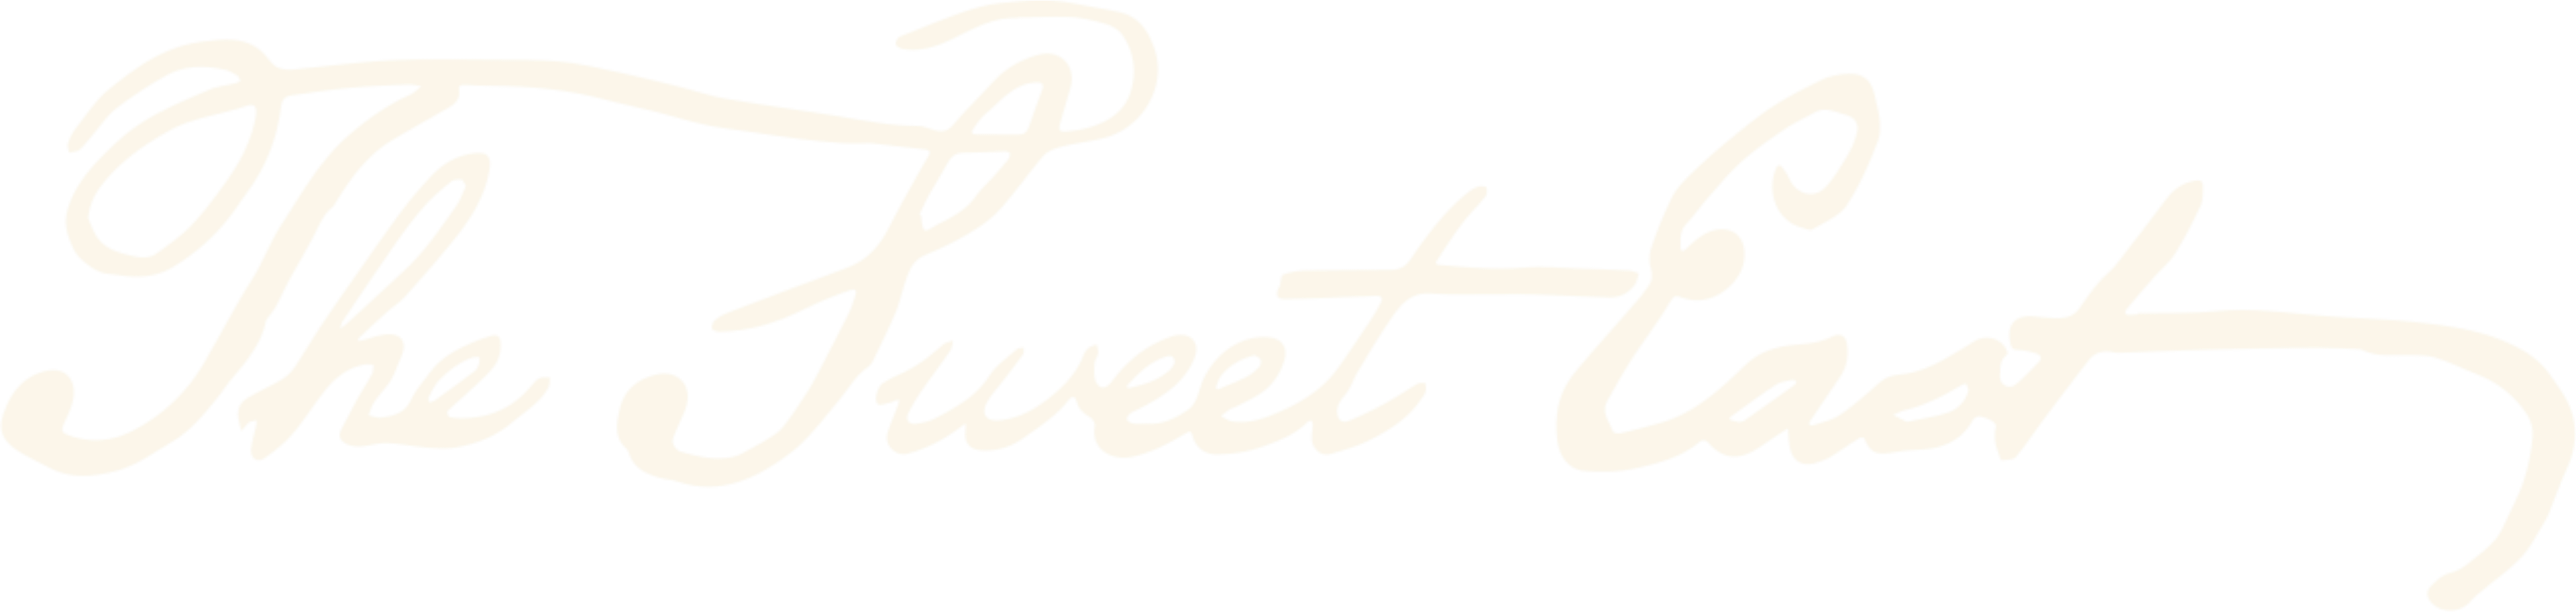 The Sweet East logo